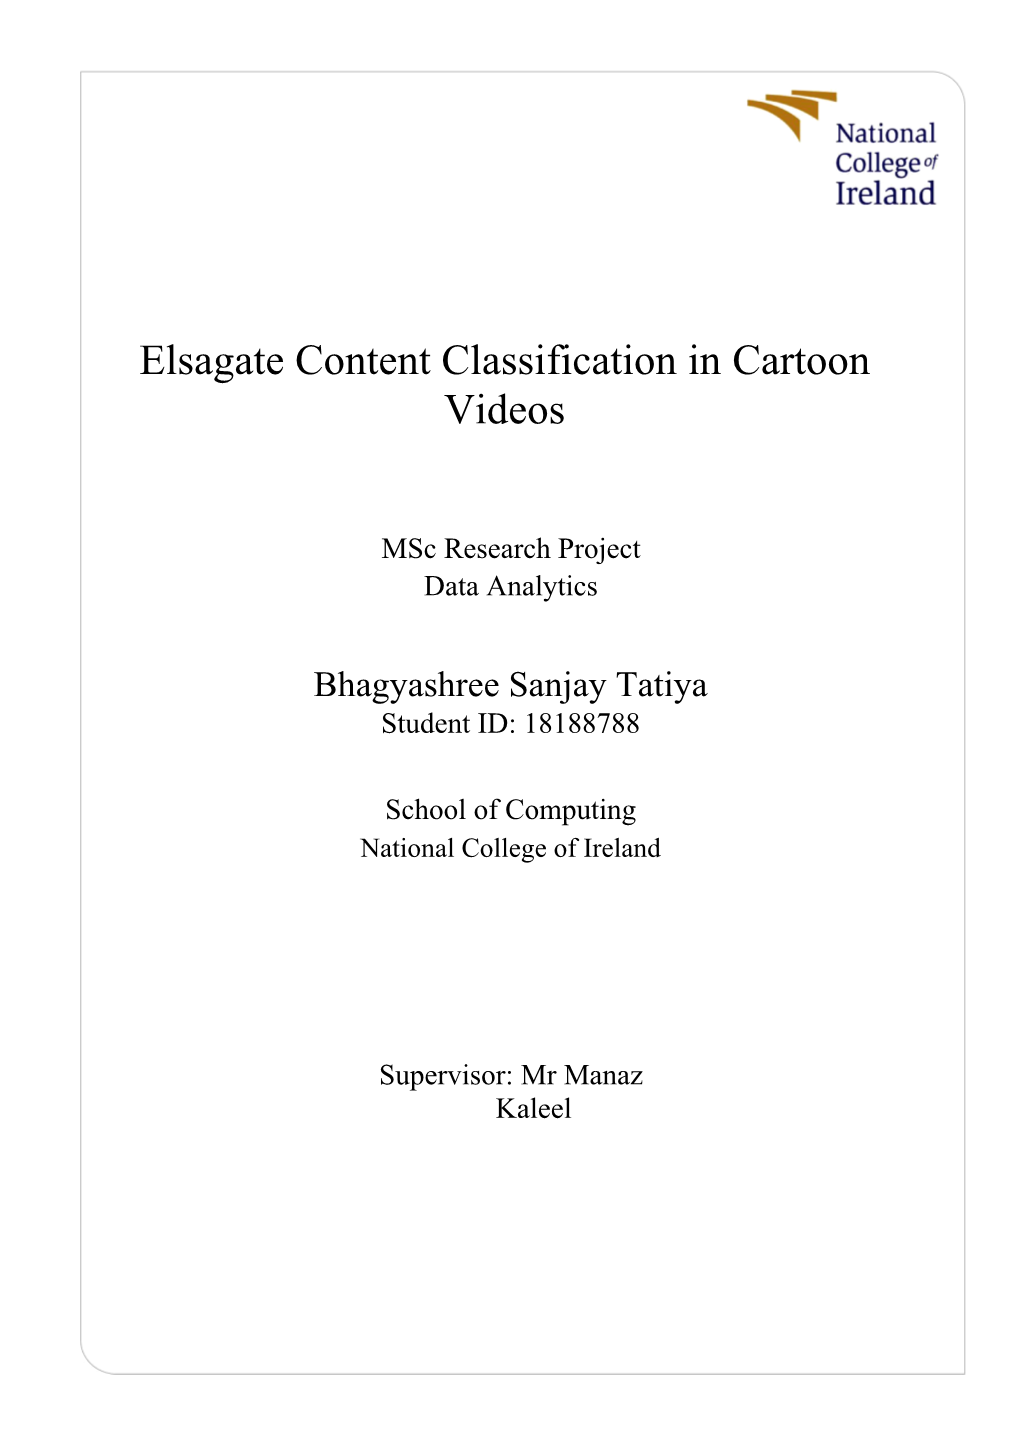 Elsagate Content Classification in Cartoon Videos